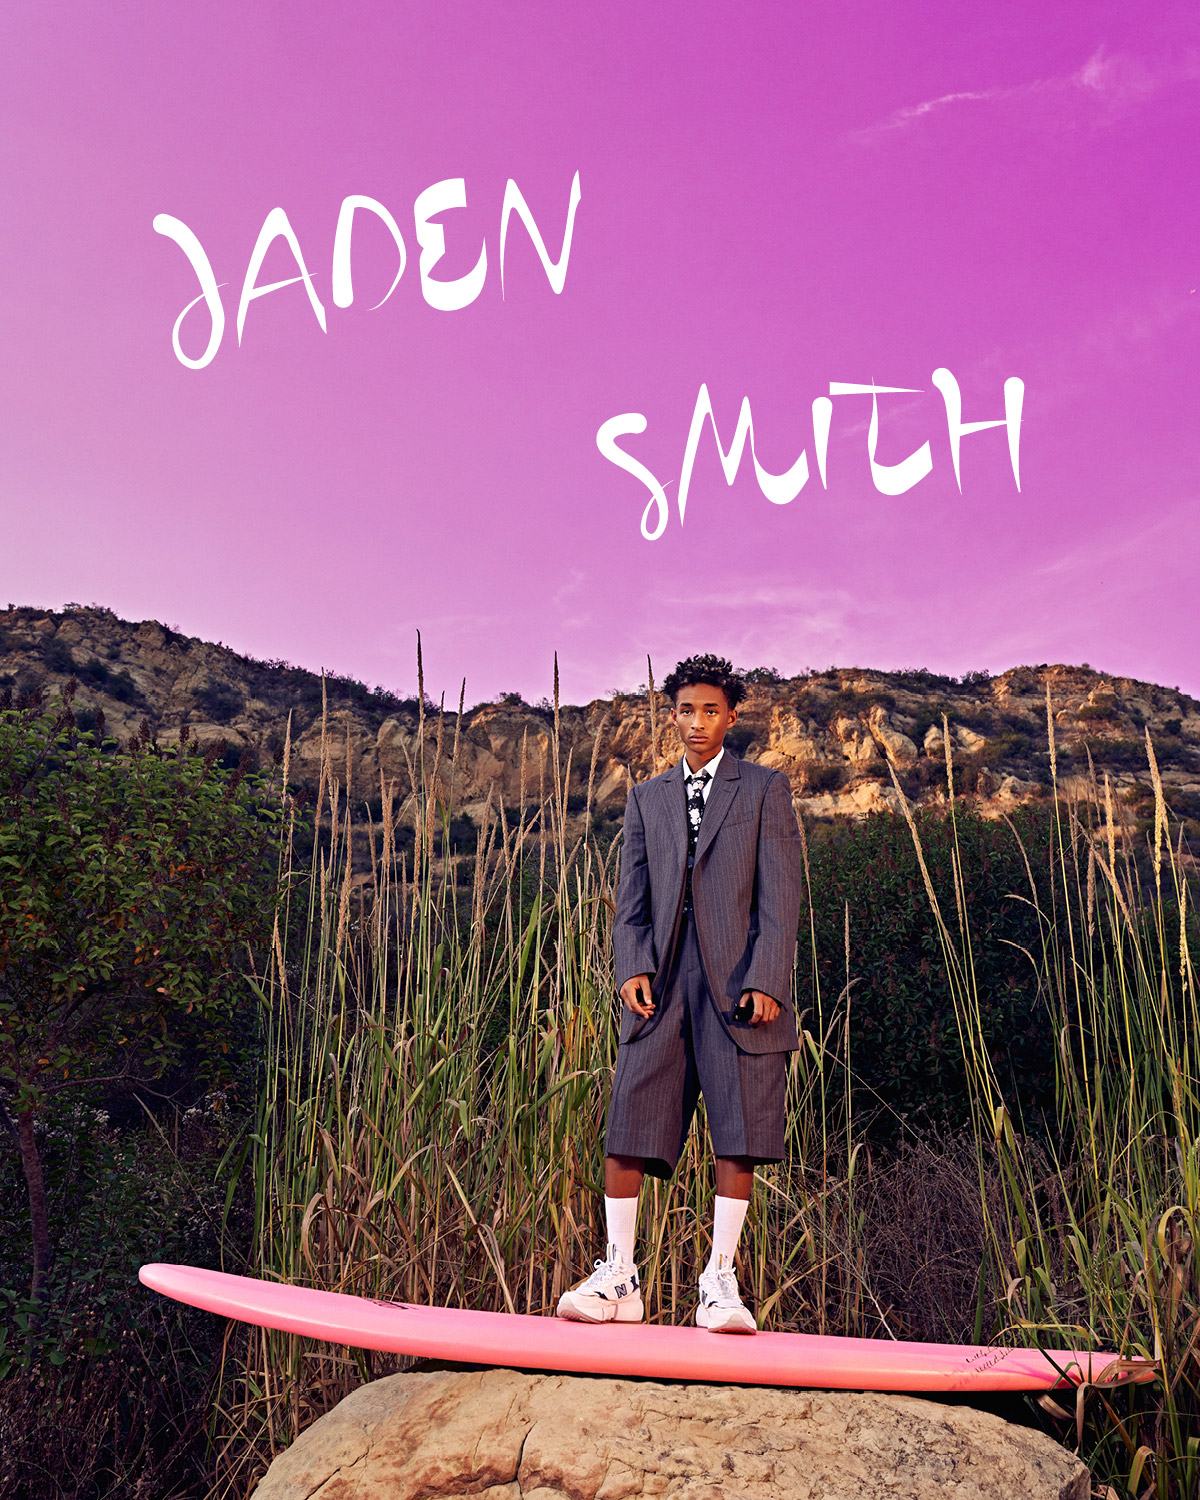 Jaden Smith's 20th Birthday: A Look at His Creative Street Style